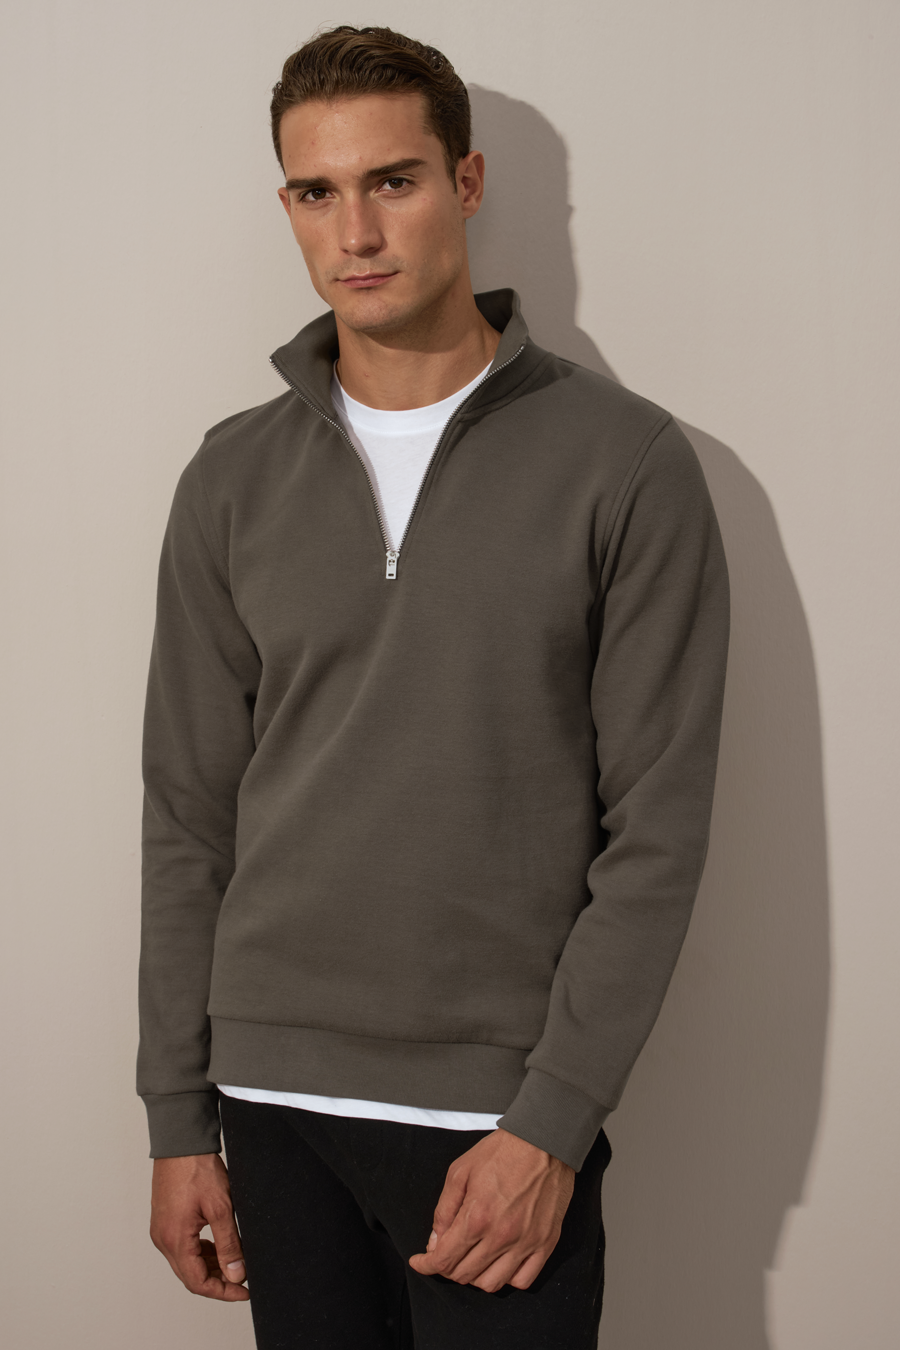 Half-Zipped Unisex Sweatshirt in Brushed Interlock Cotton